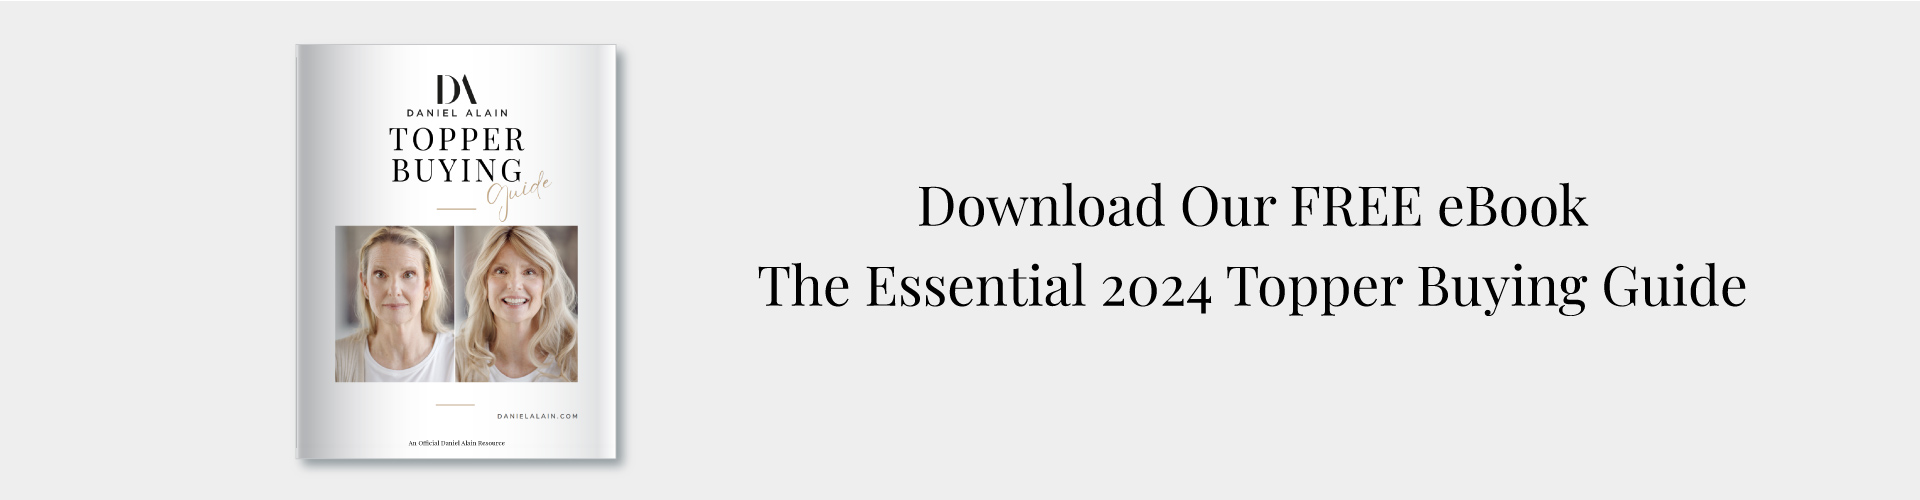 ebook-2024-topper-buying-guide-desktop-banner-1920px